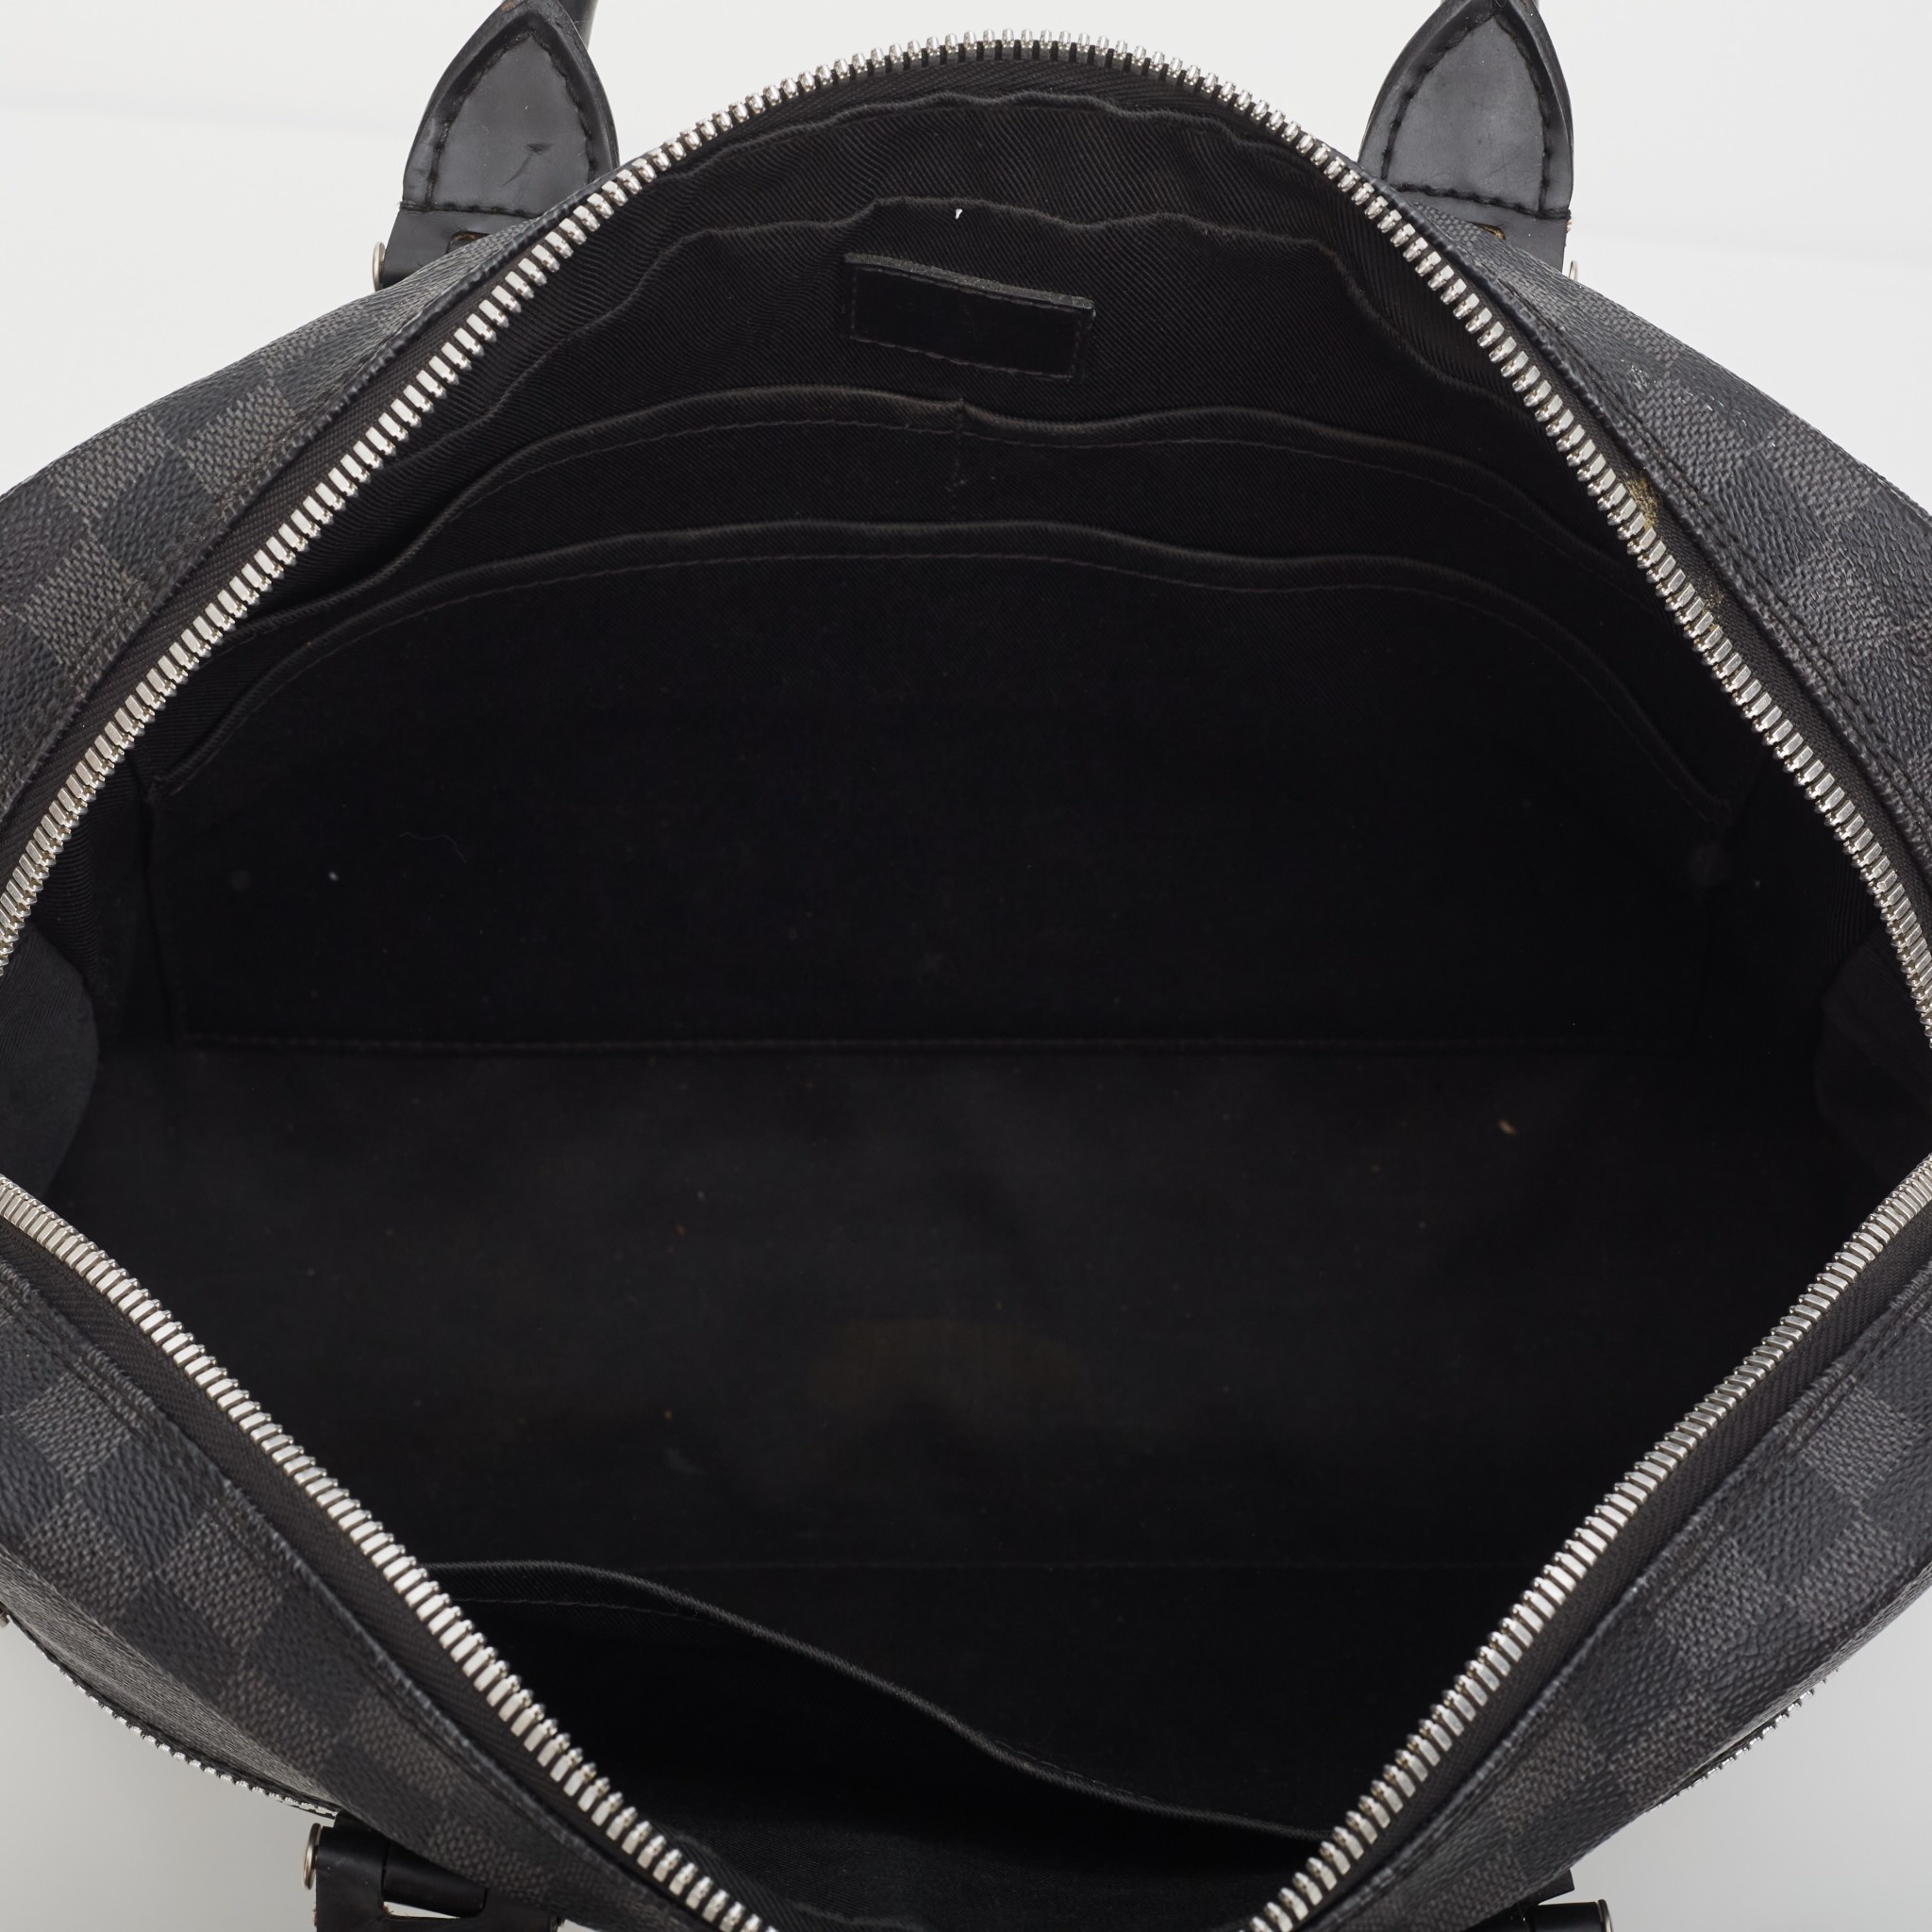 Louis Vuitton Damier Graphite Briefcase Bag (2015)